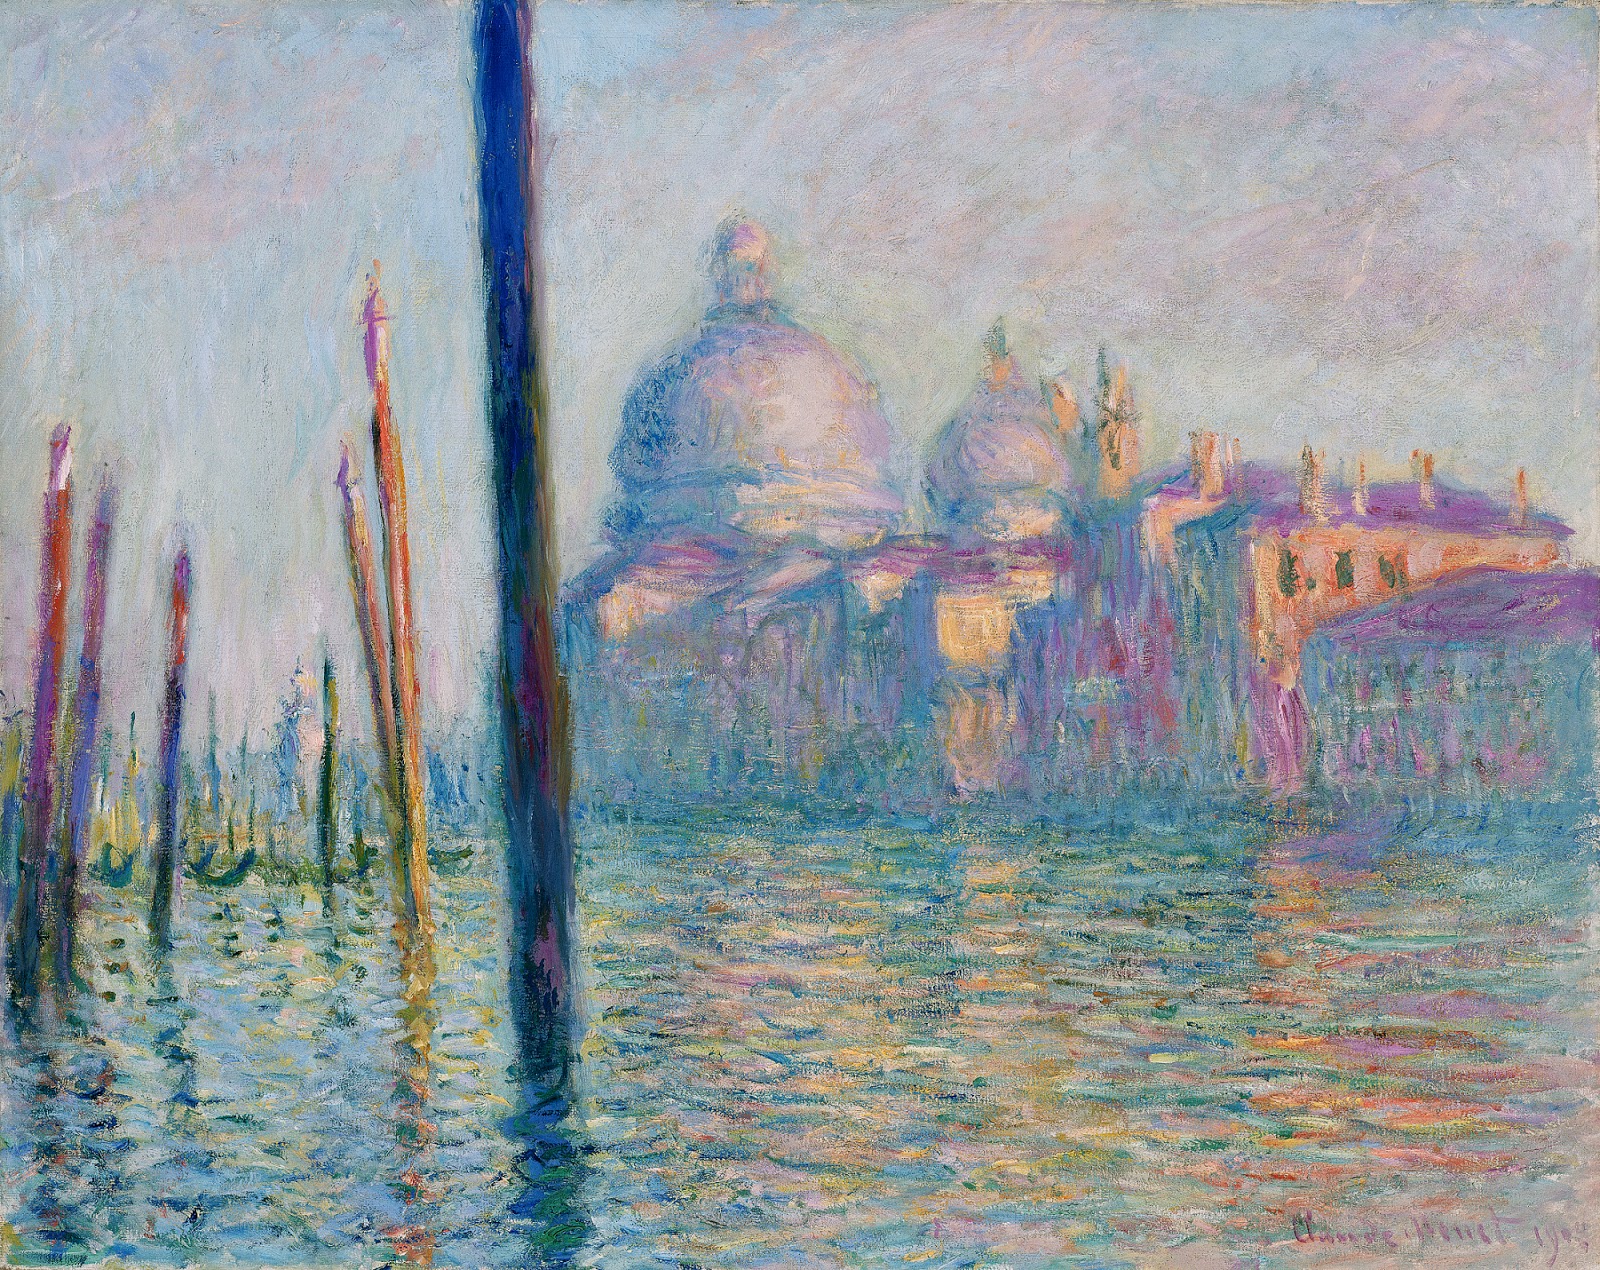 Claude+Monet-1840-1926 (749).jpg